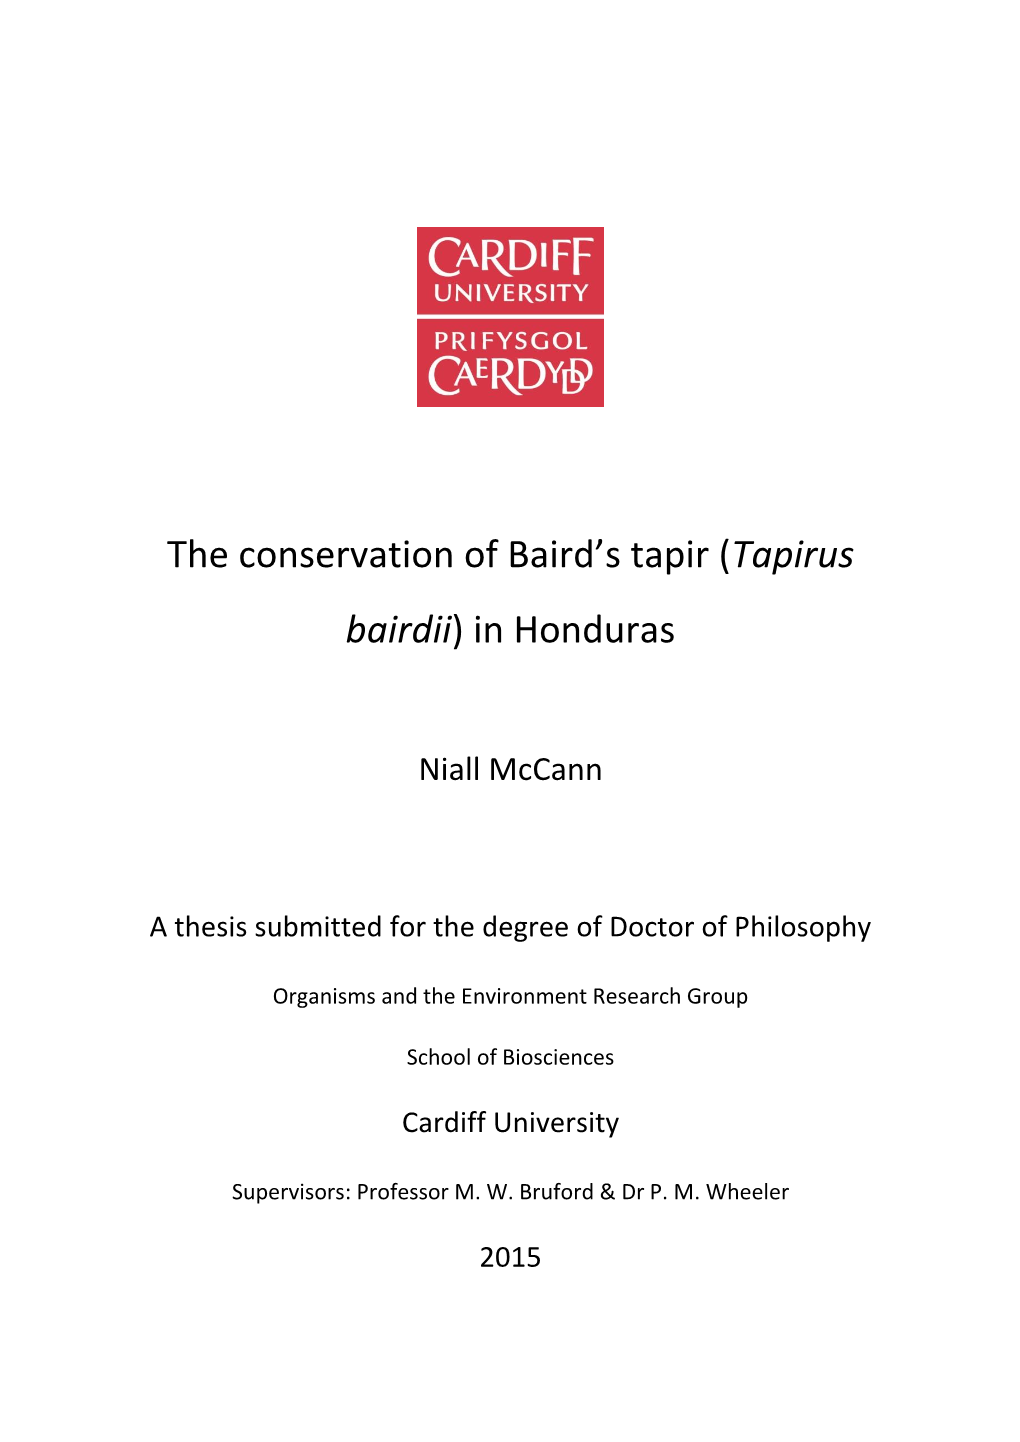 The Conservation of Baird's Tapir (Tapirus Bairdii) in Honduras